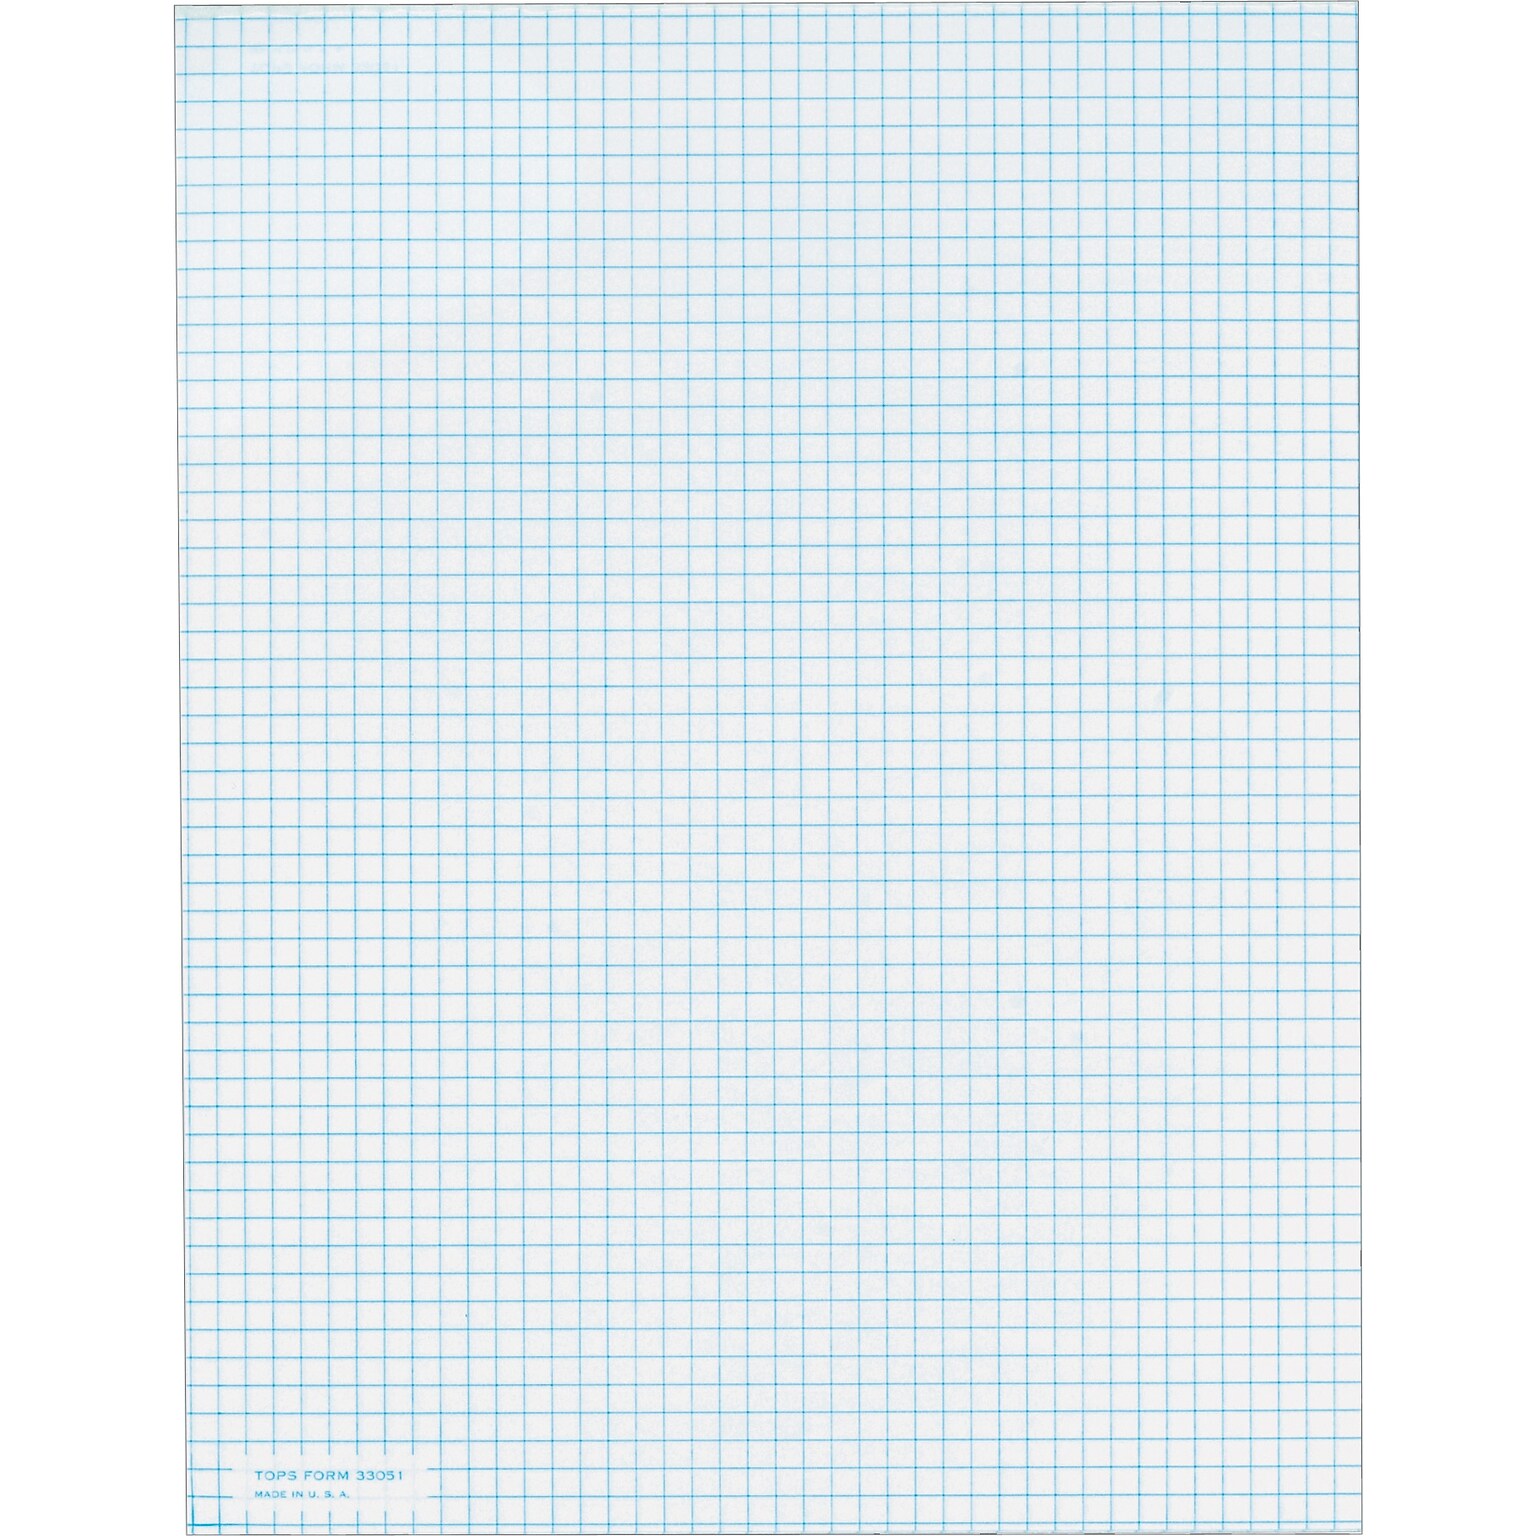 TOPS Graph Pad, 8.5 x 11, Quad Ruled, White, 50 Sheets/Pad (33051)